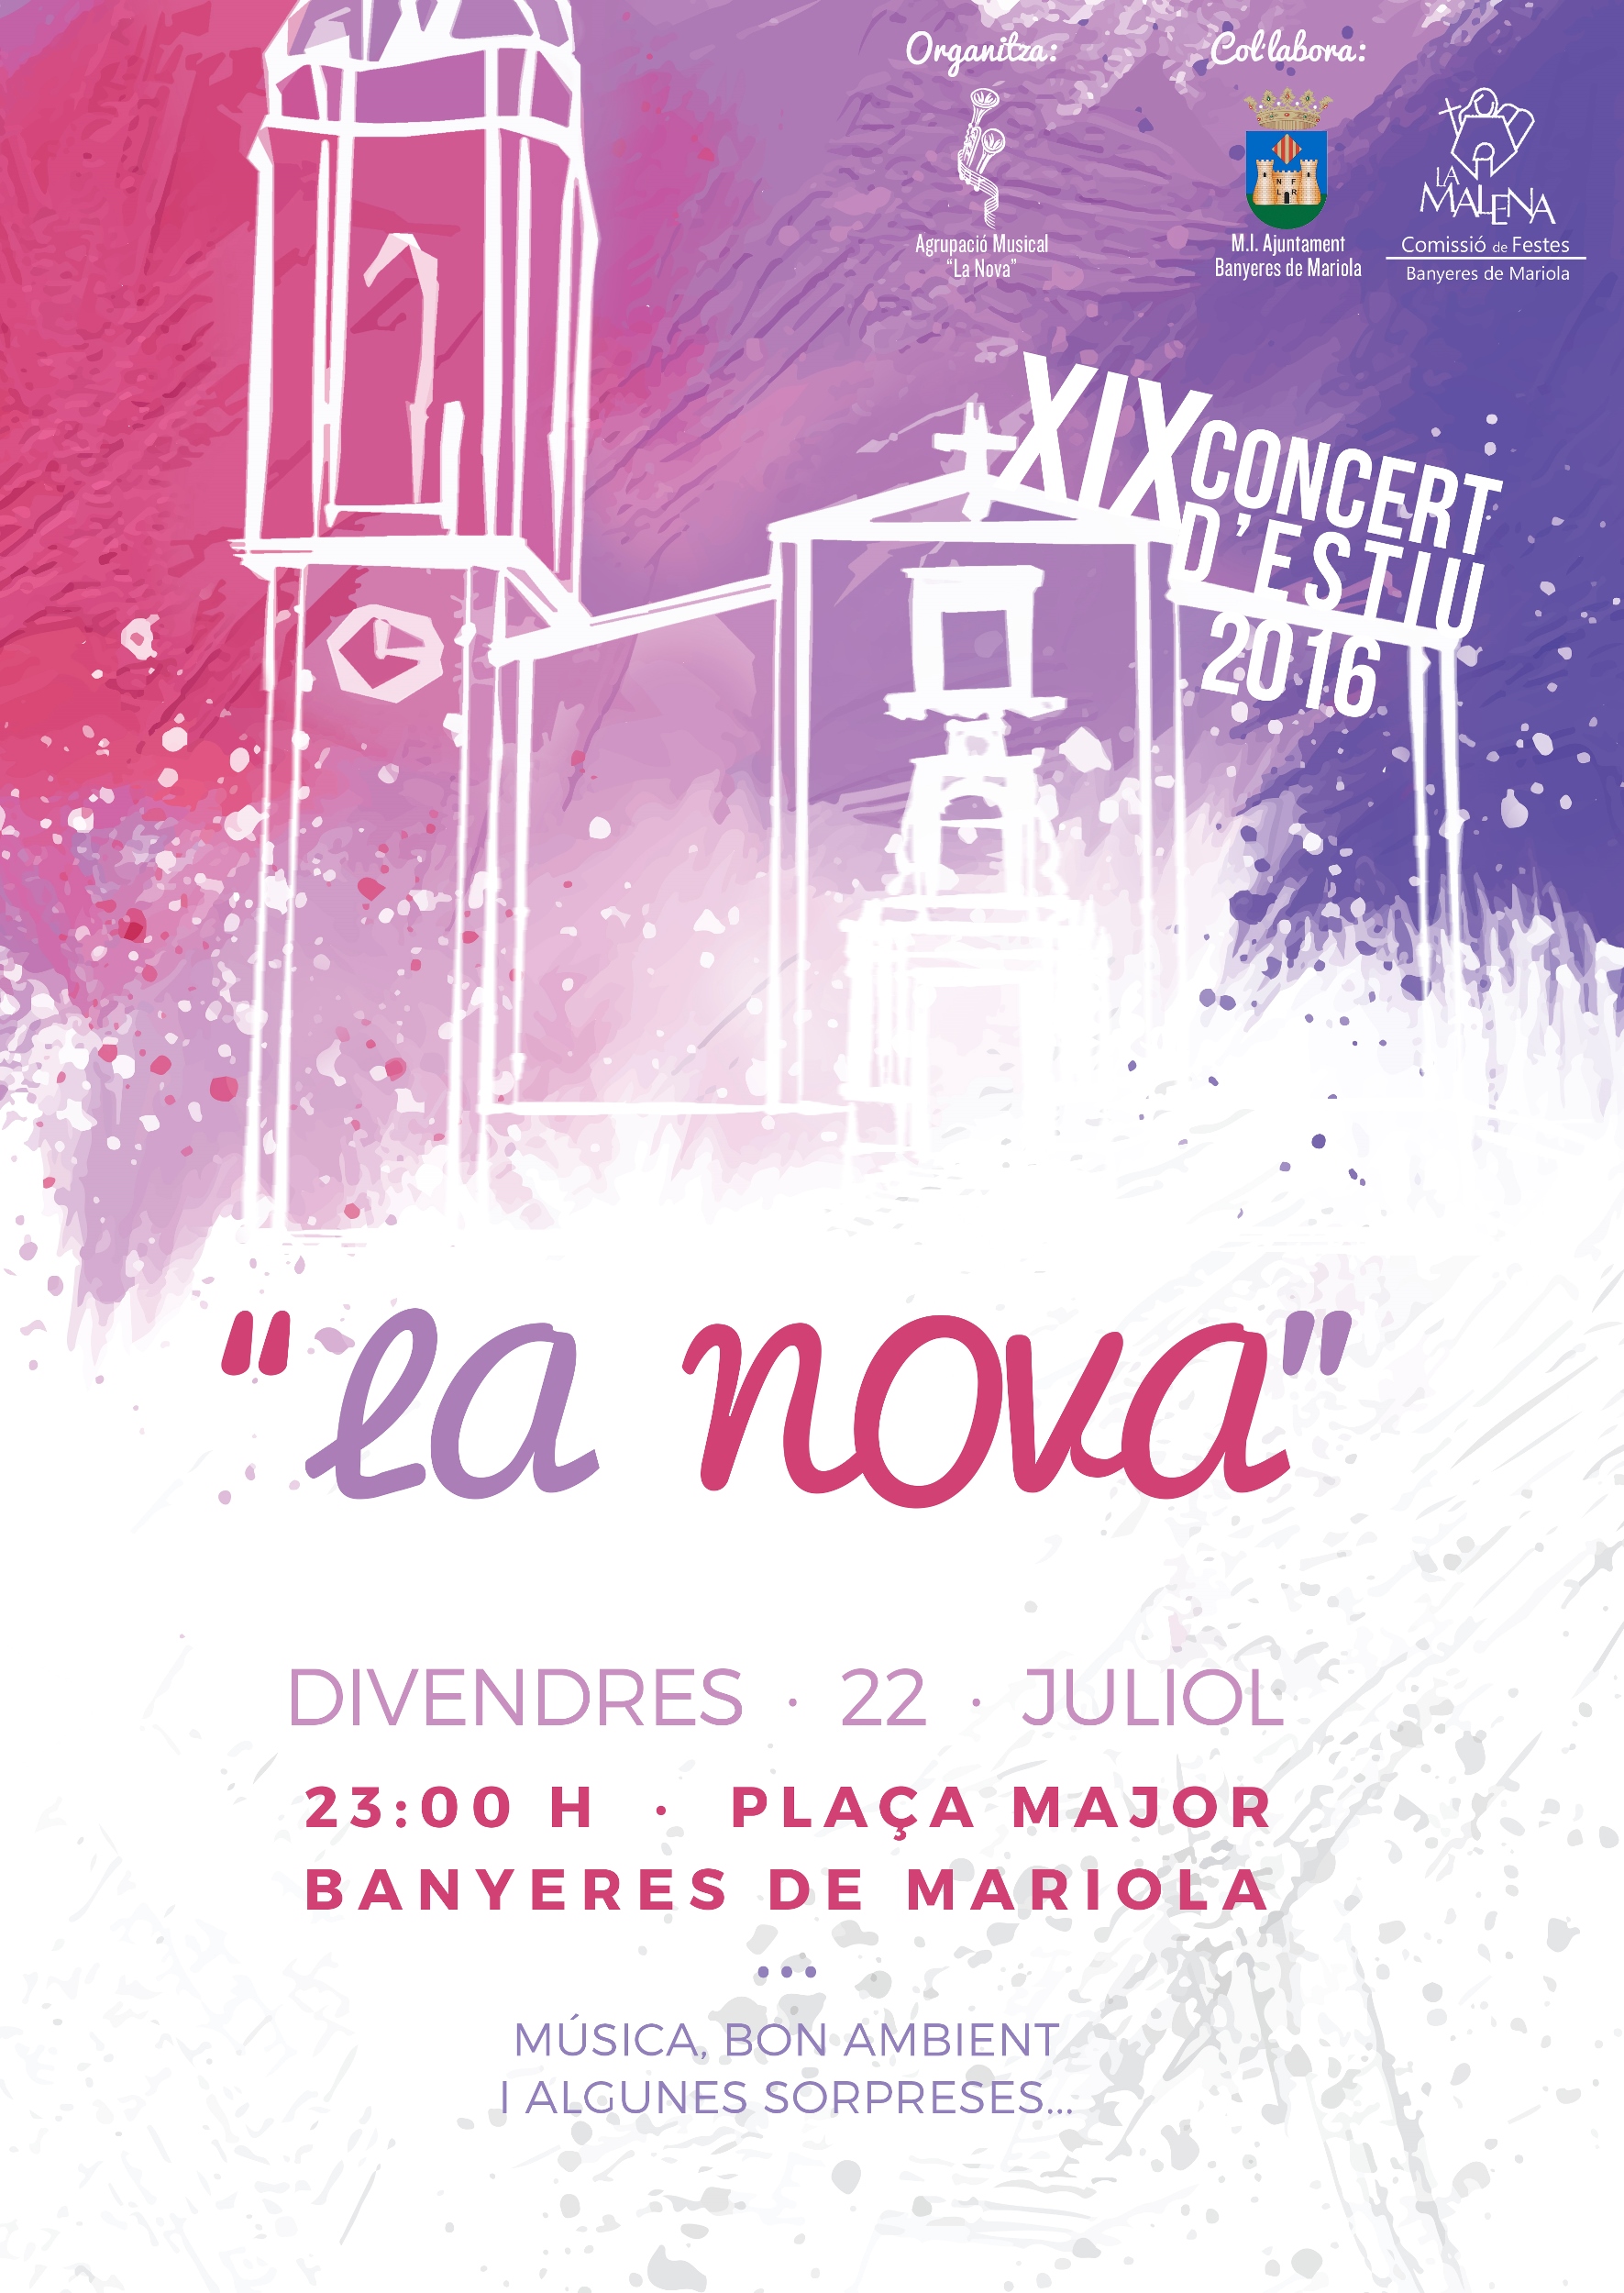 Concert Malena 16-2